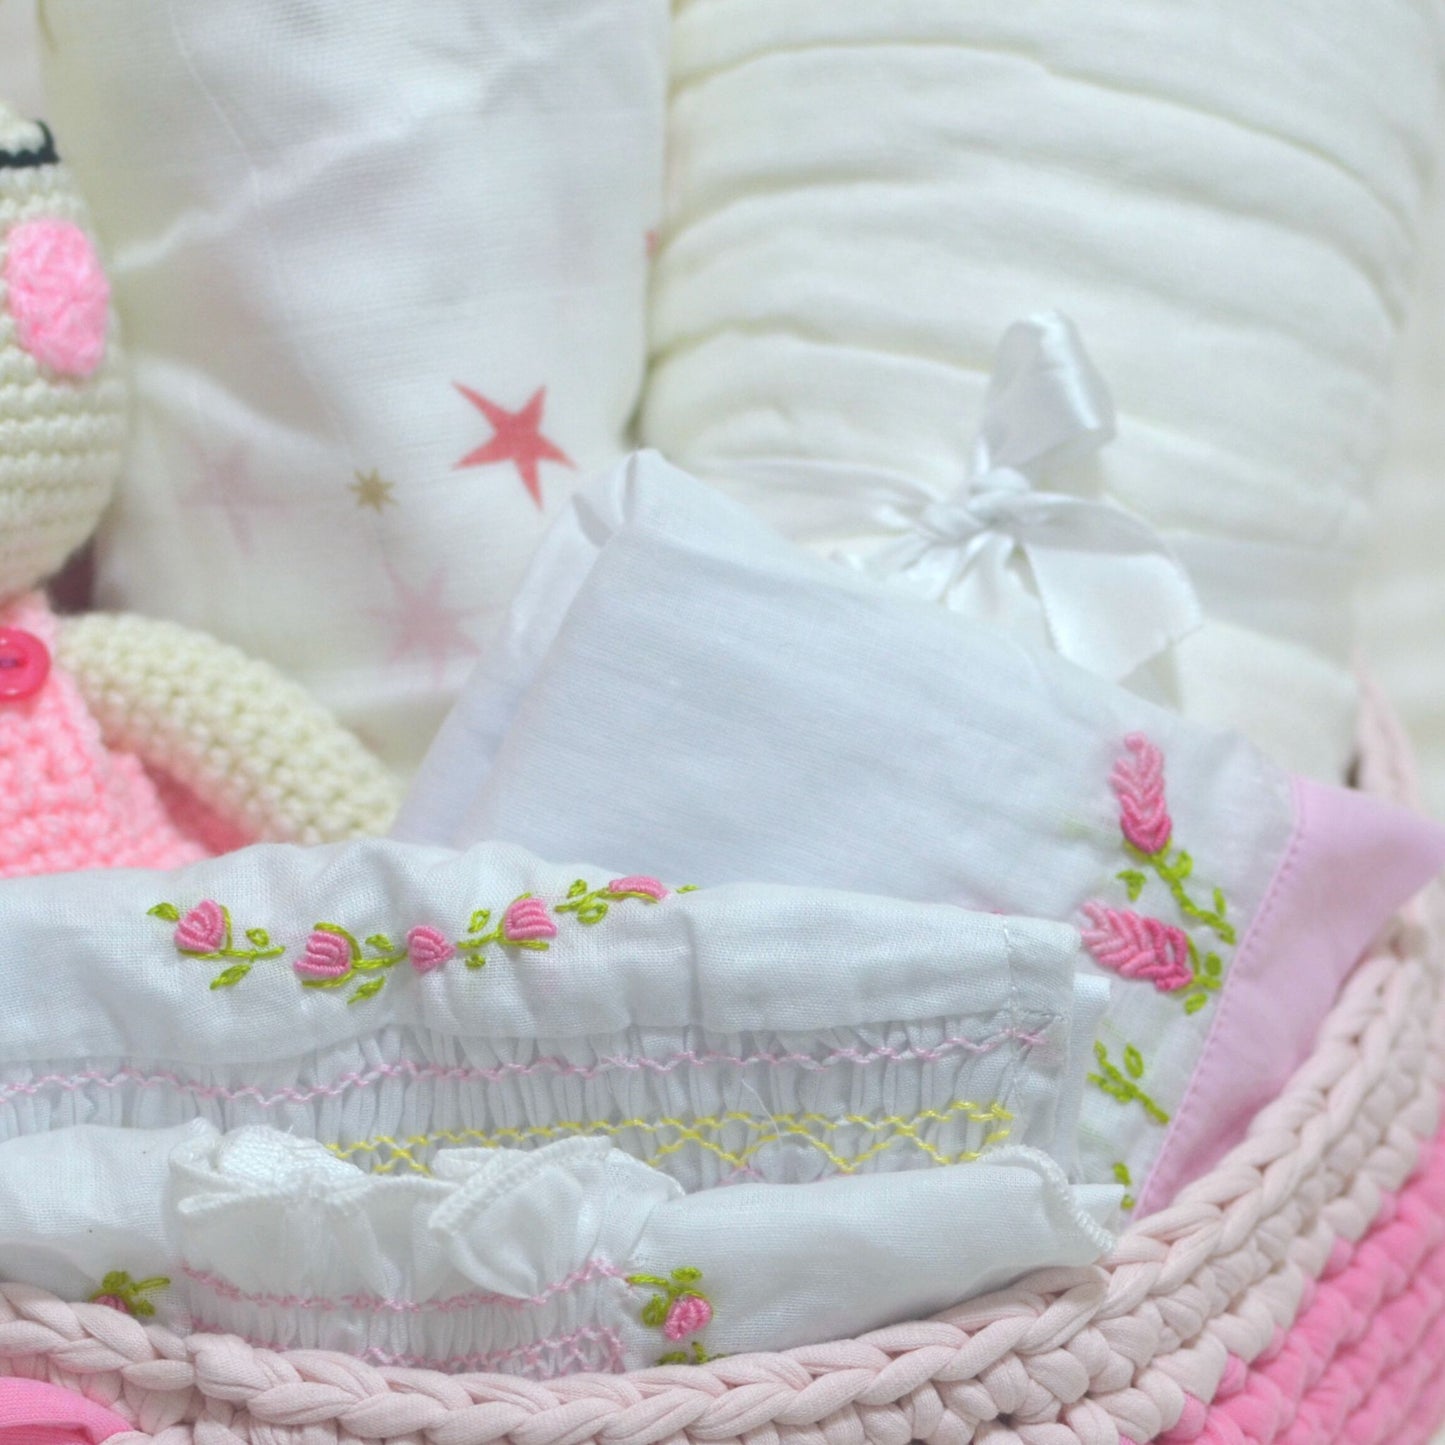 Crochet Basket Baby Hamper Gift - Pink